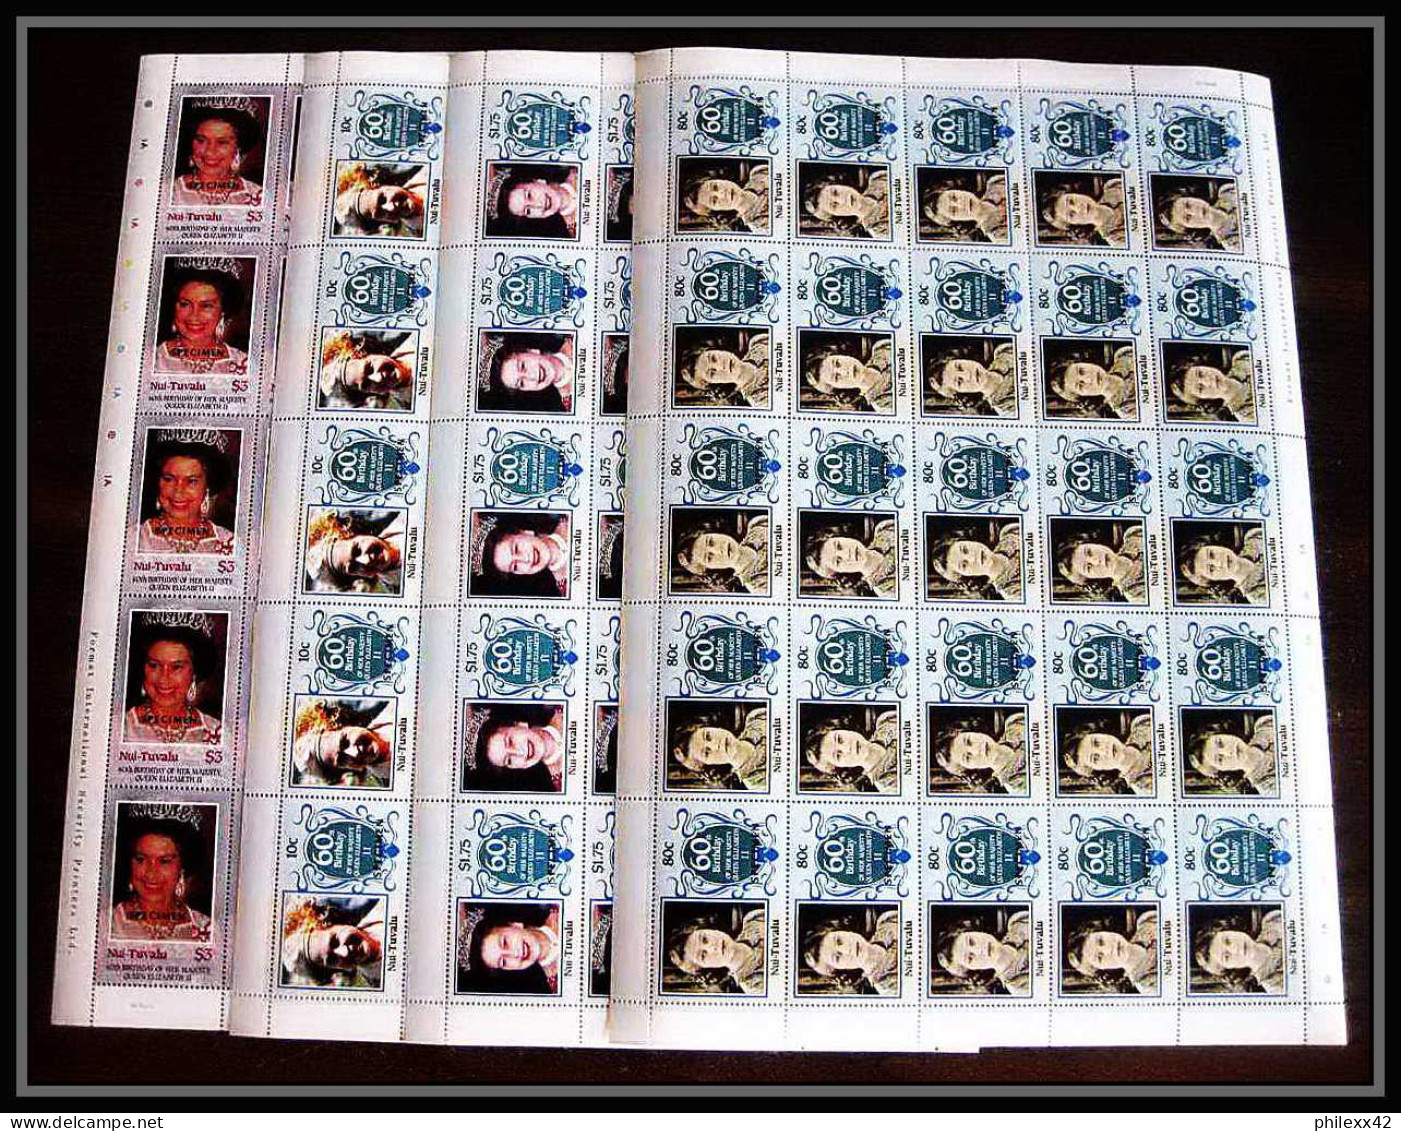 595c Nui Tuvalu MNH ** 1986 Mi N° 71 / 74 Sc 56 / 59 Elizabeth Queen Mother Overprint Specimen Proof Feuilles (sheets) - Tuvalu